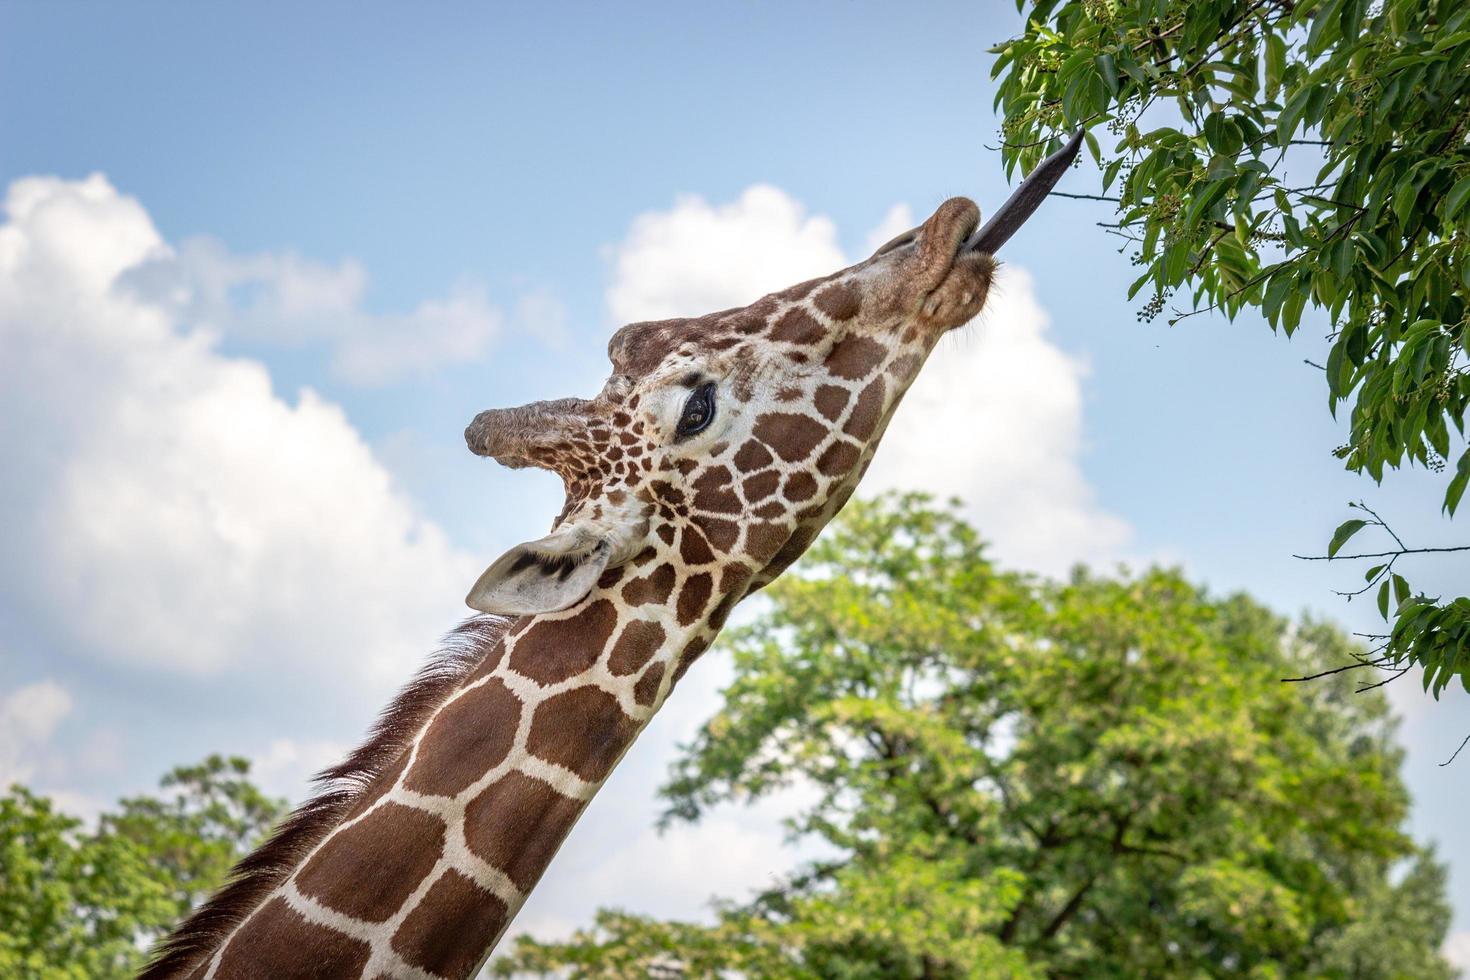 Giraffe eating leaves from tree photo